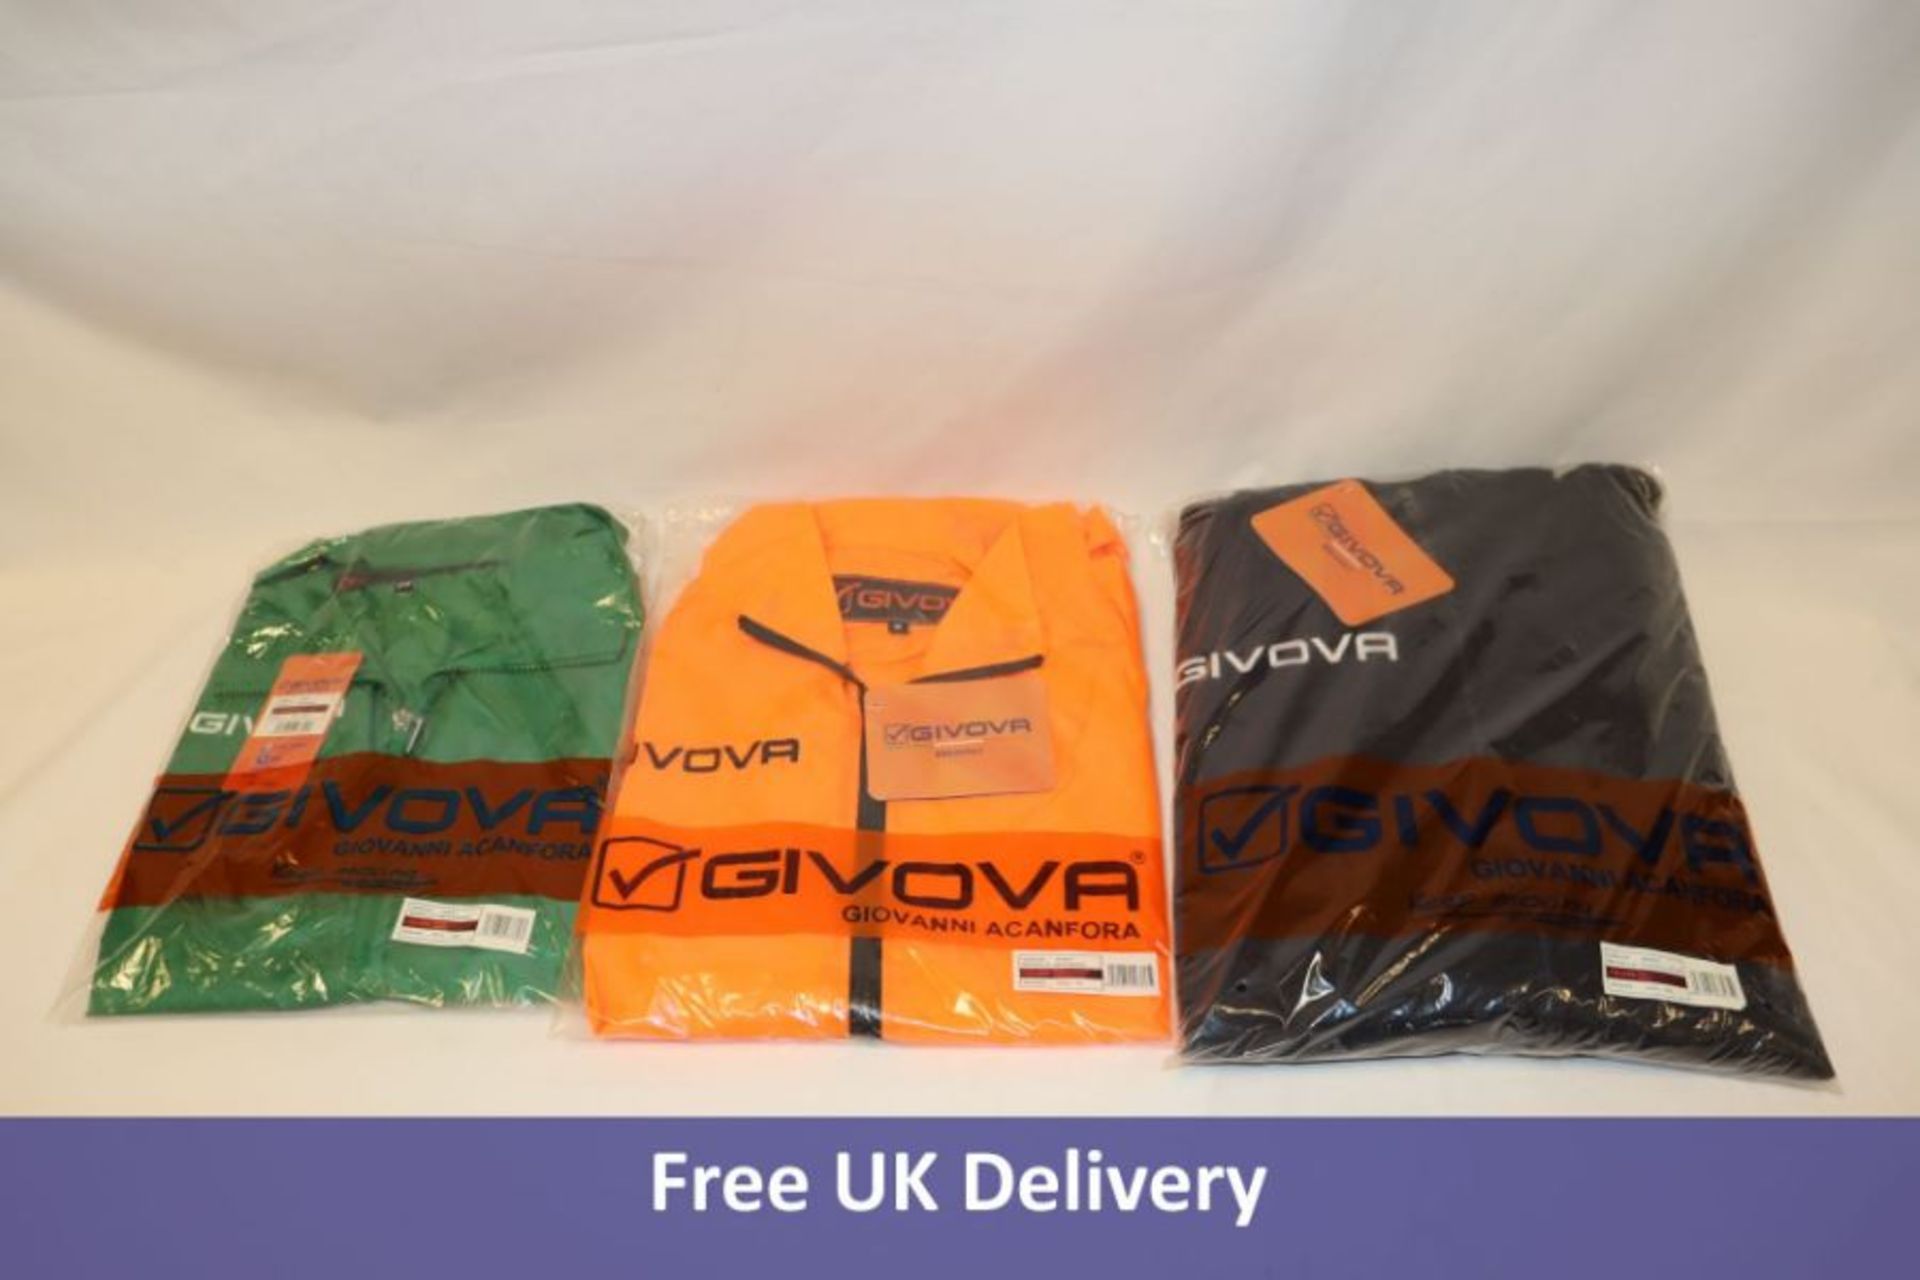 Givova Football Clothing to include 4x Kits, 3x Shirts, 2x Rain Jackets, 3x Training Tops, 1x Bottom